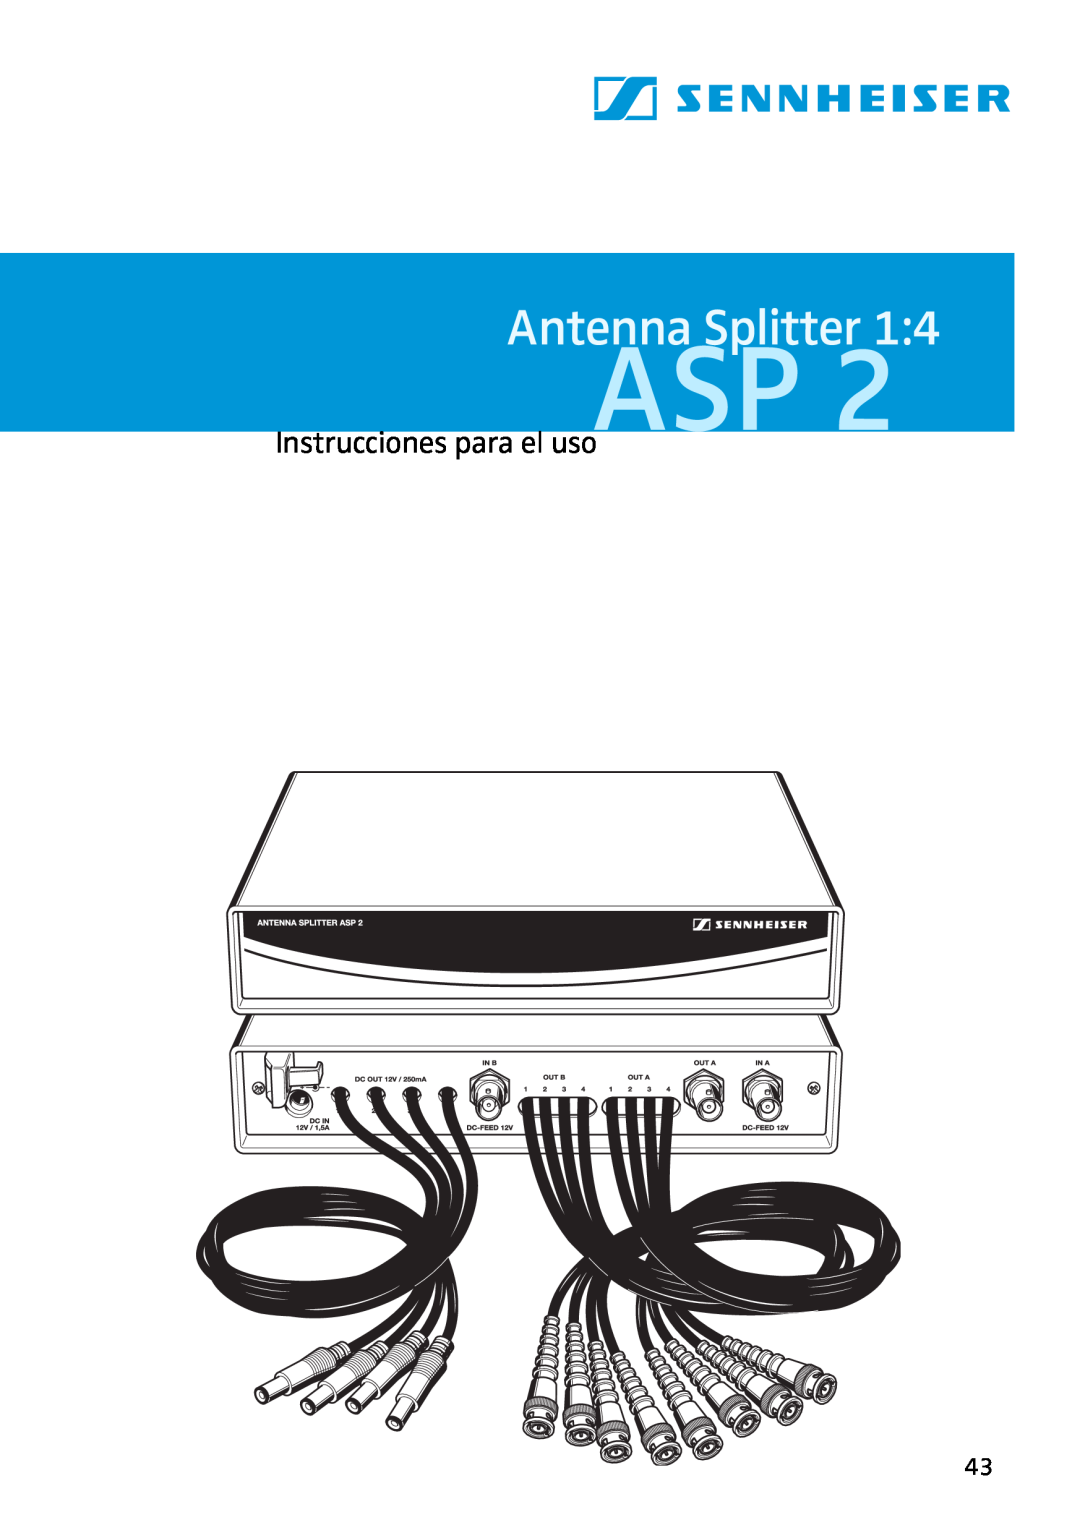 Sennheiser ASP 2 manual Instrucciones para el uso, Antenna Splitter 